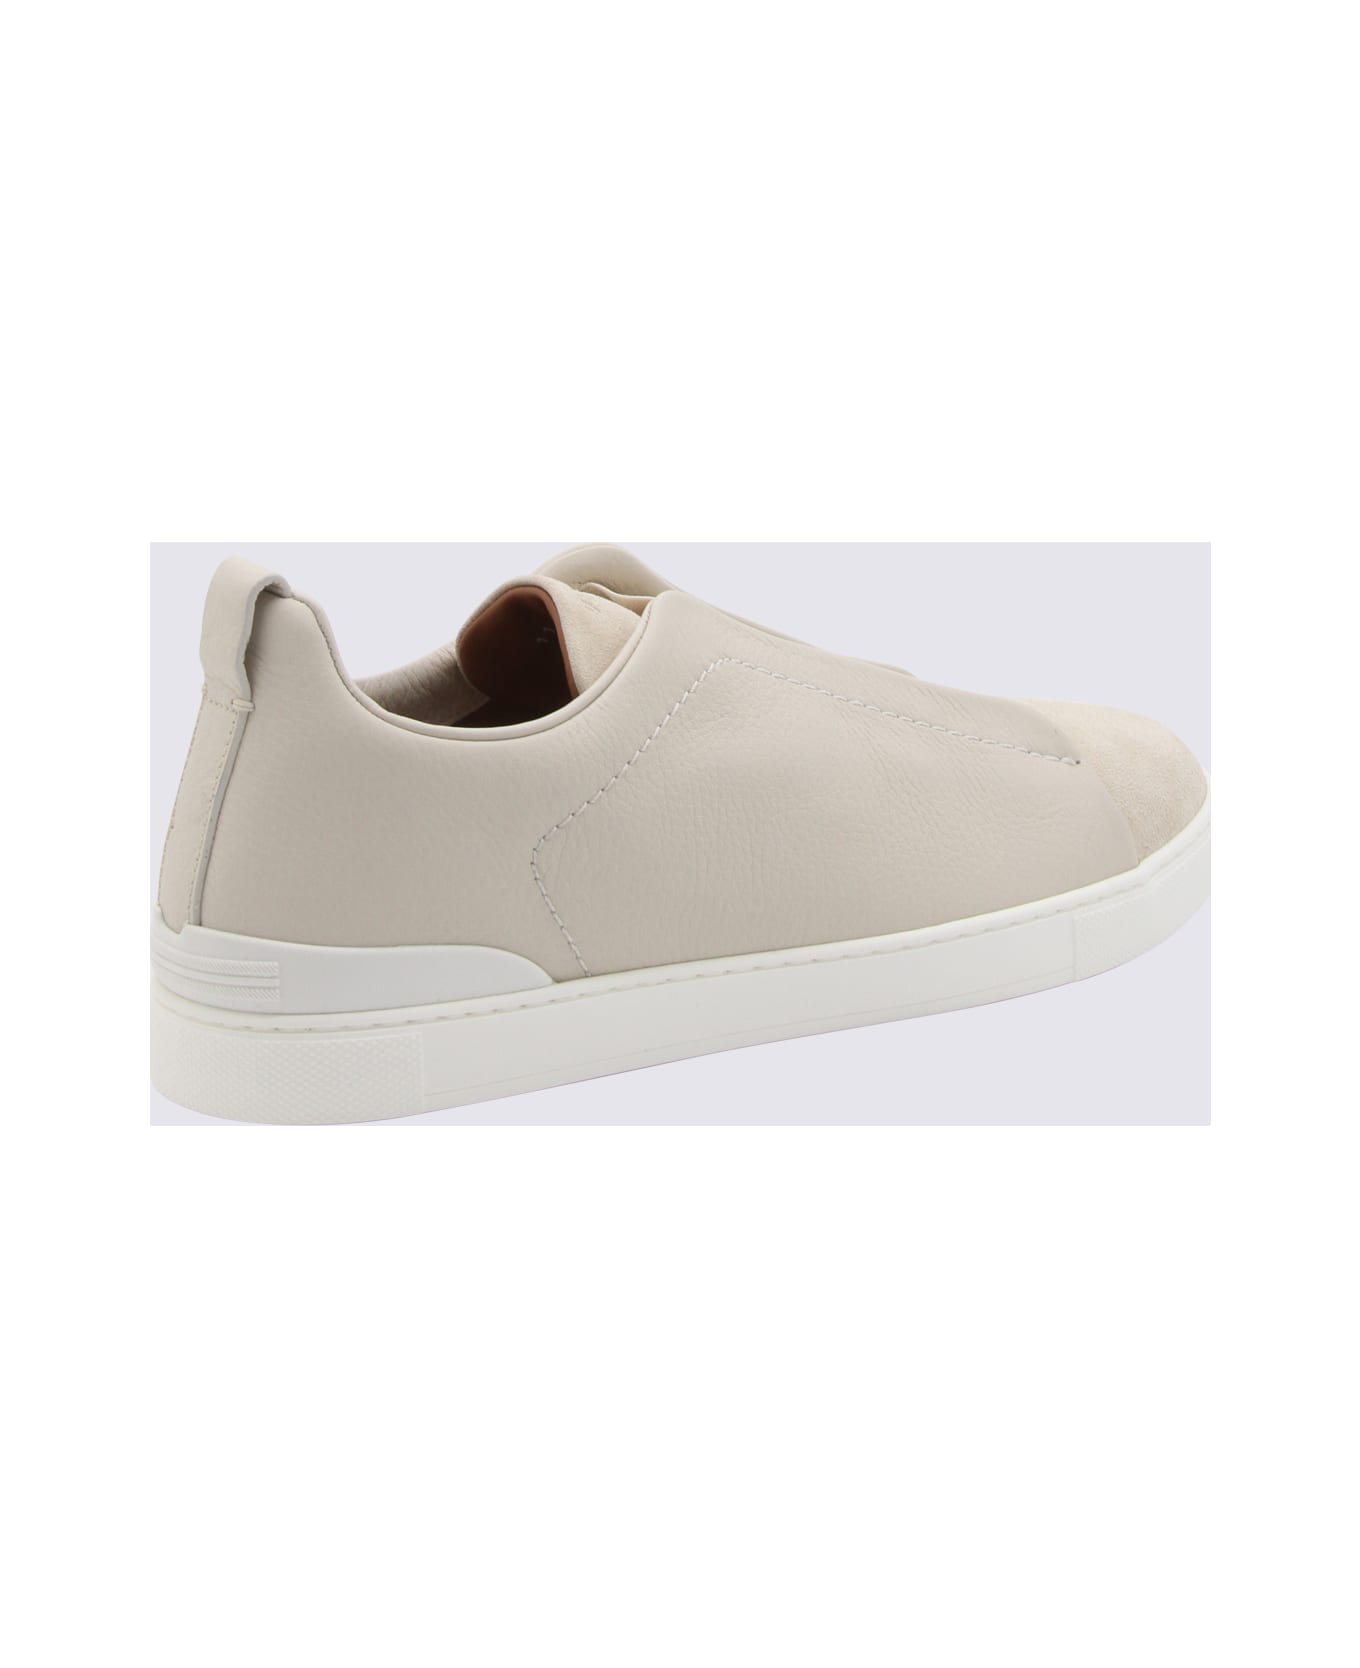 Zegna White Leather Slip On Sneakers - White スニーカー